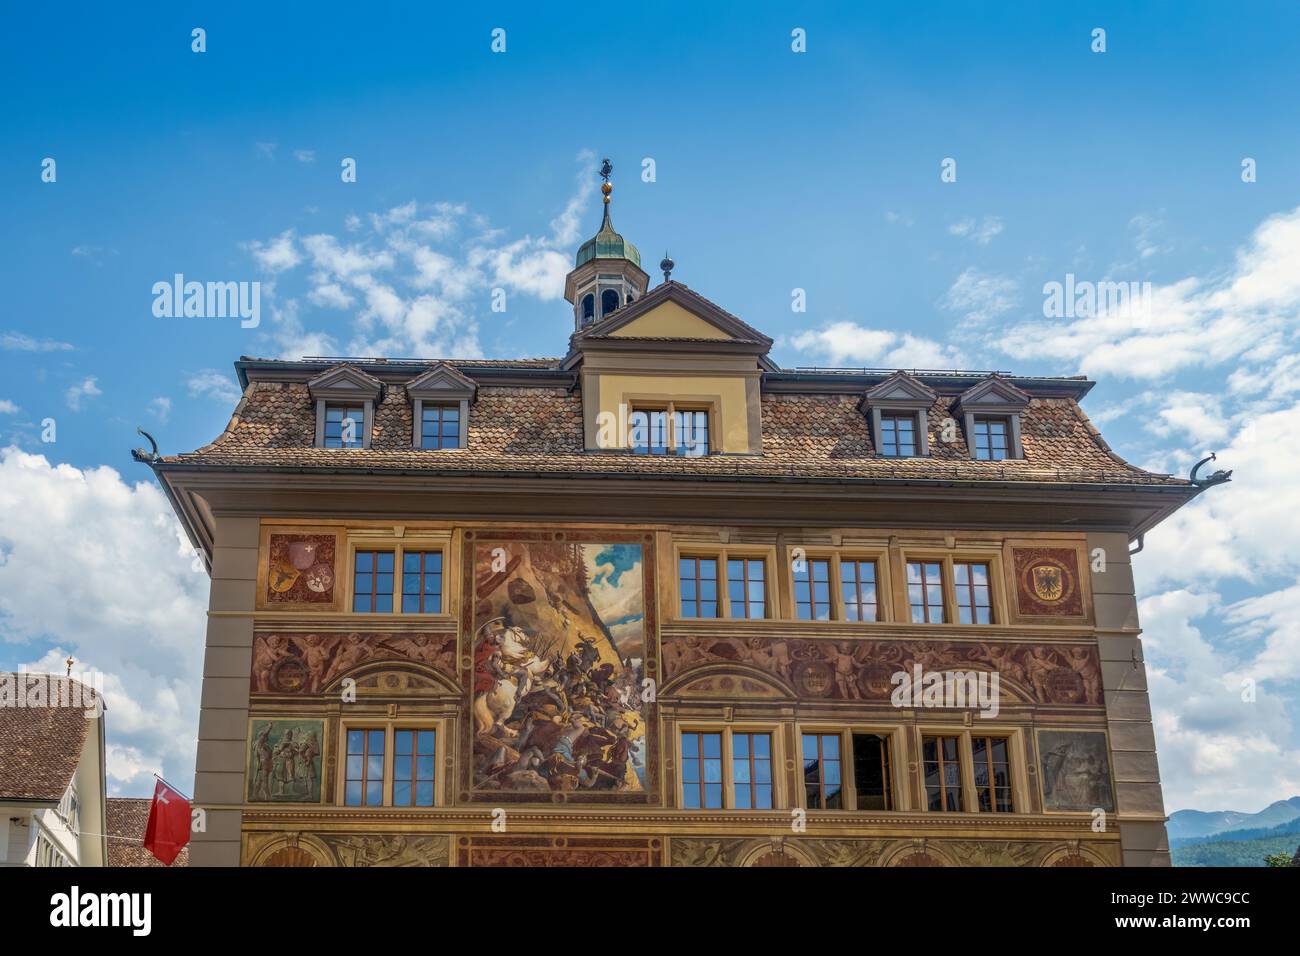 Town hall in old city of Schwyz, Switzerland Stock Photo